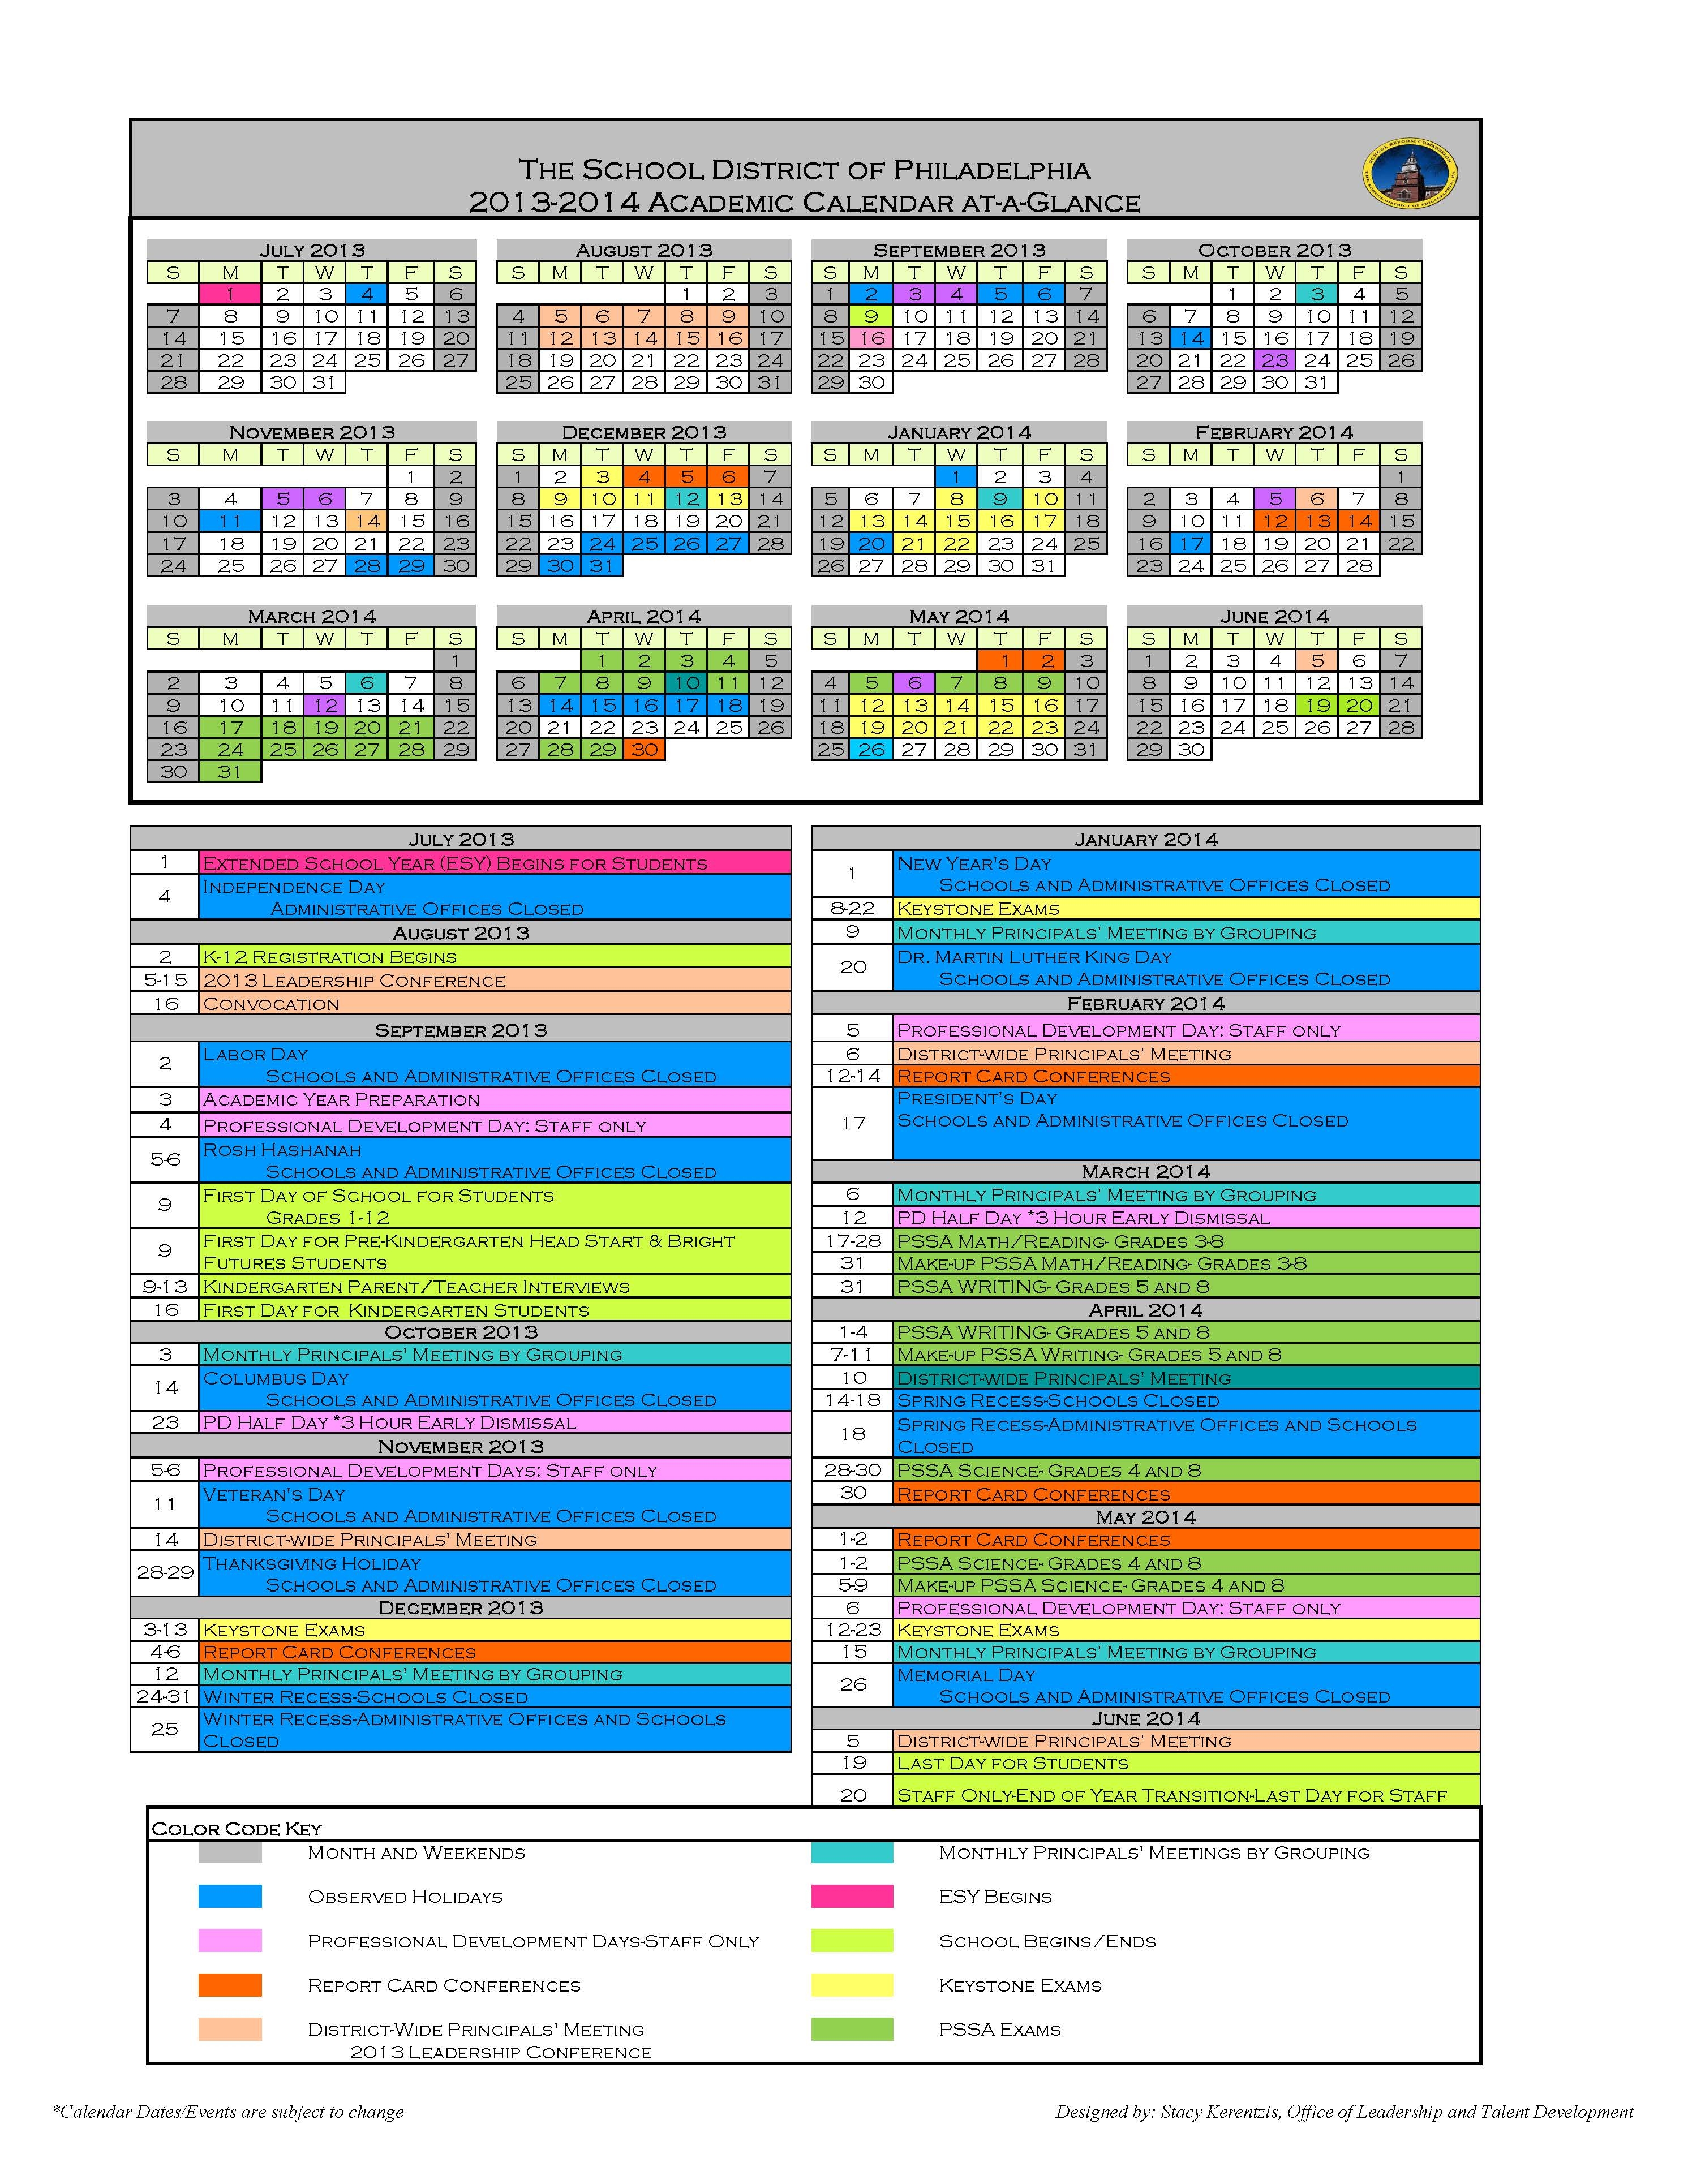 school-district-of-philadelphia-calendar-qualads